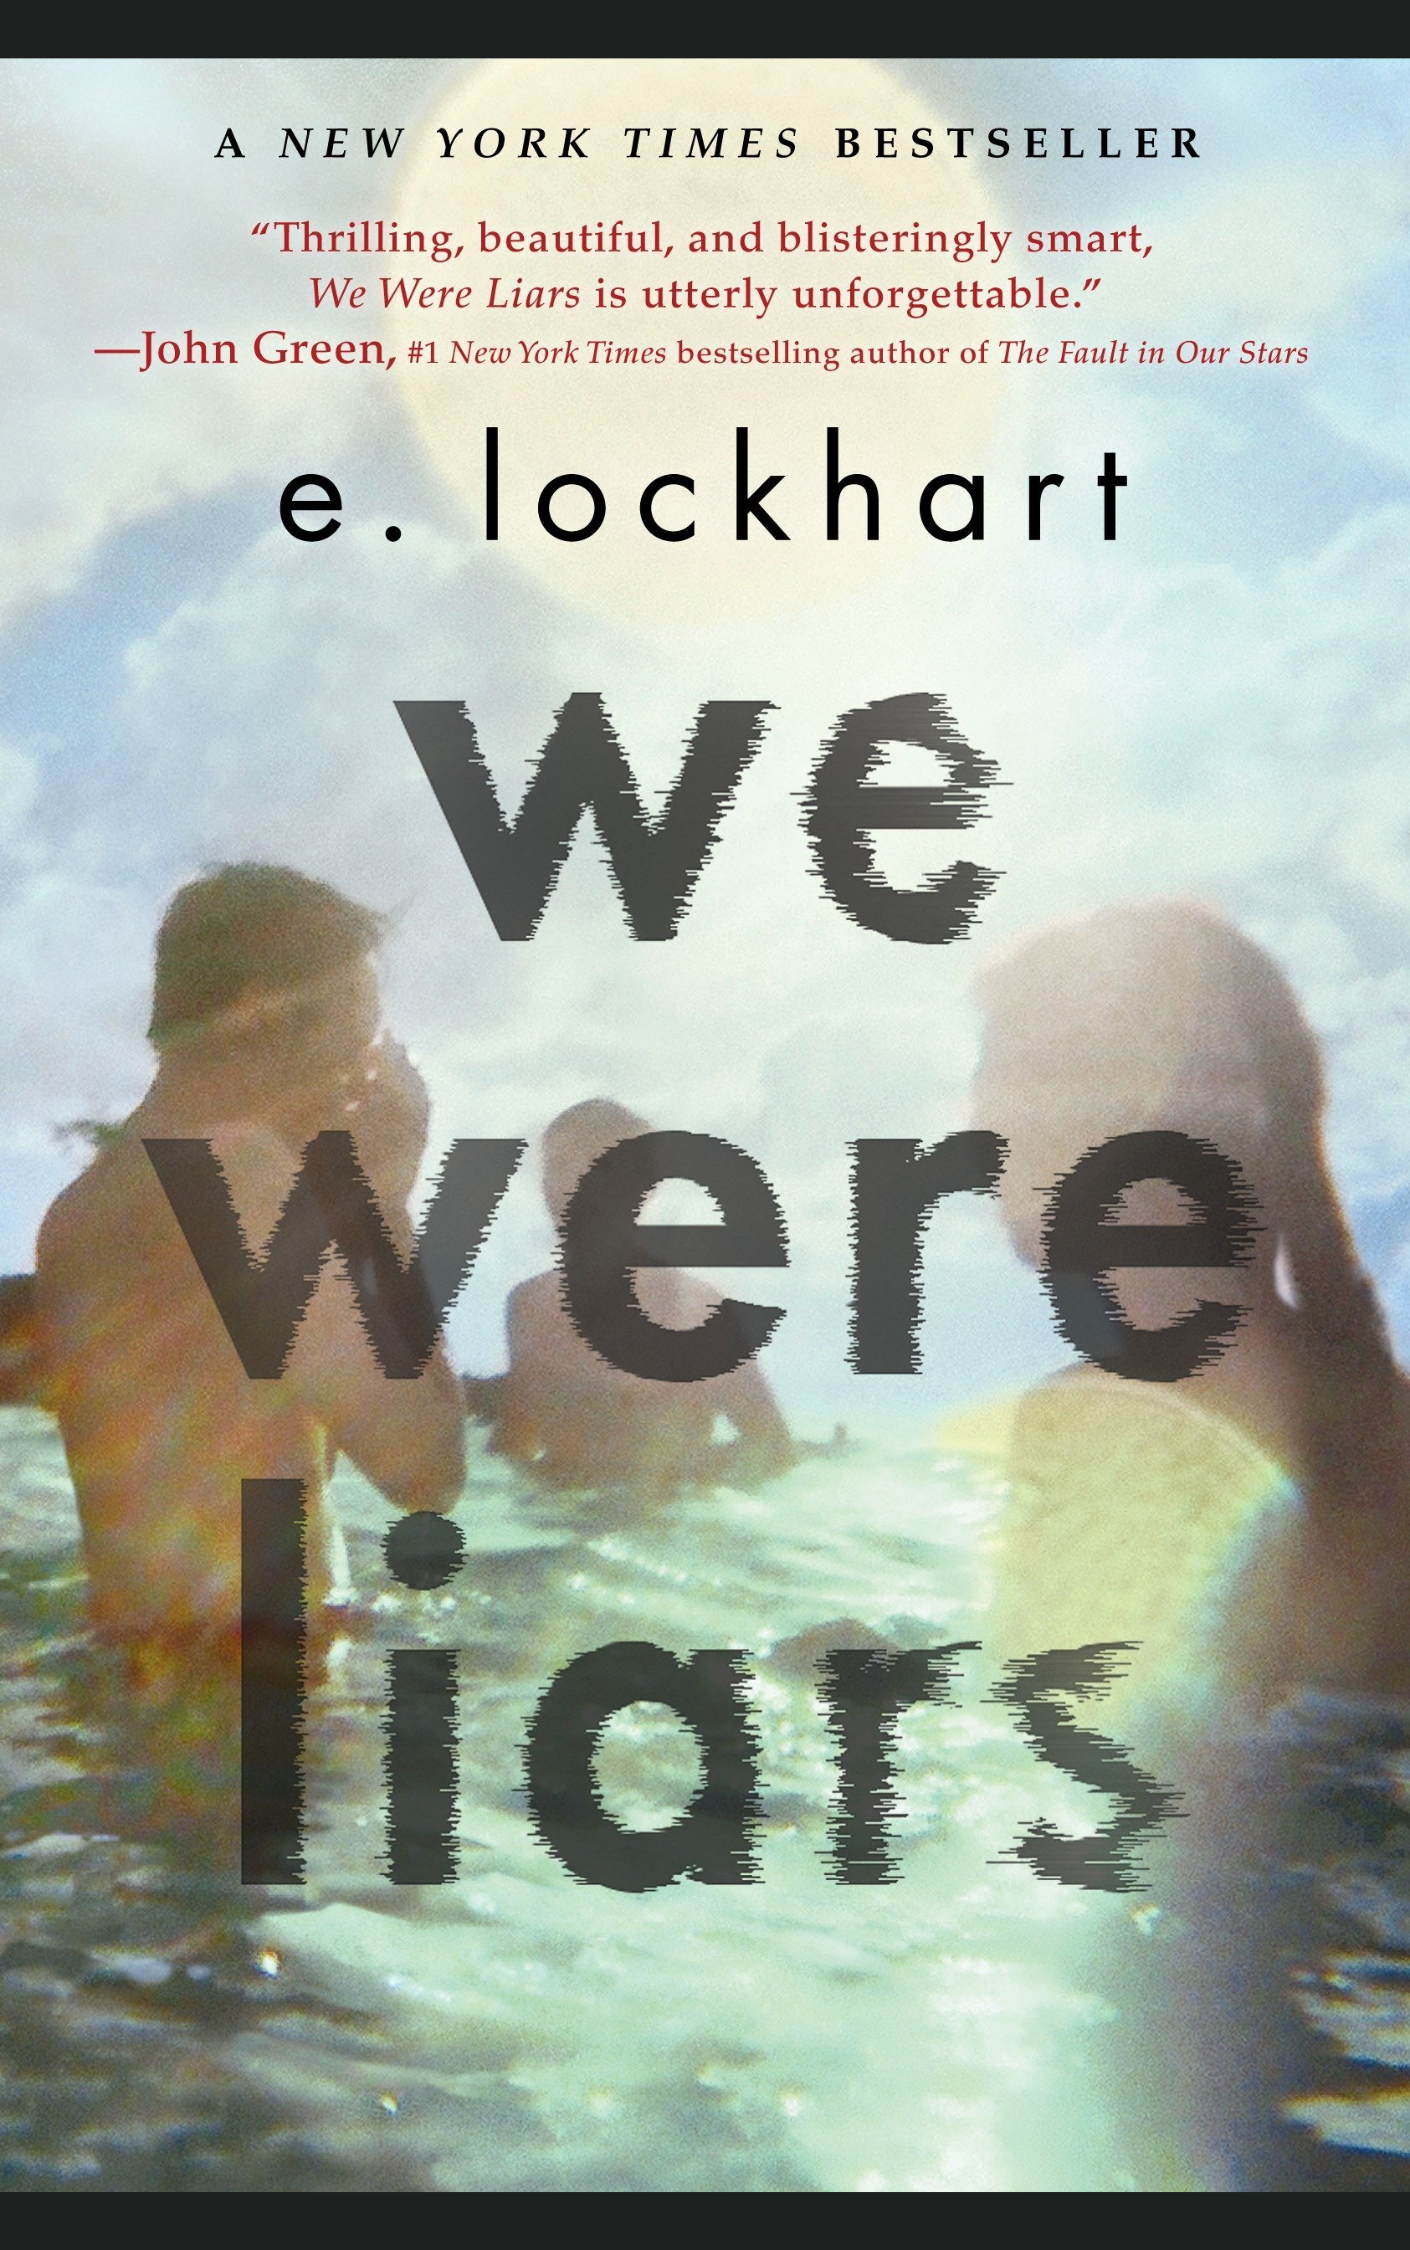 WE WERE LIARS by E LOCKHART